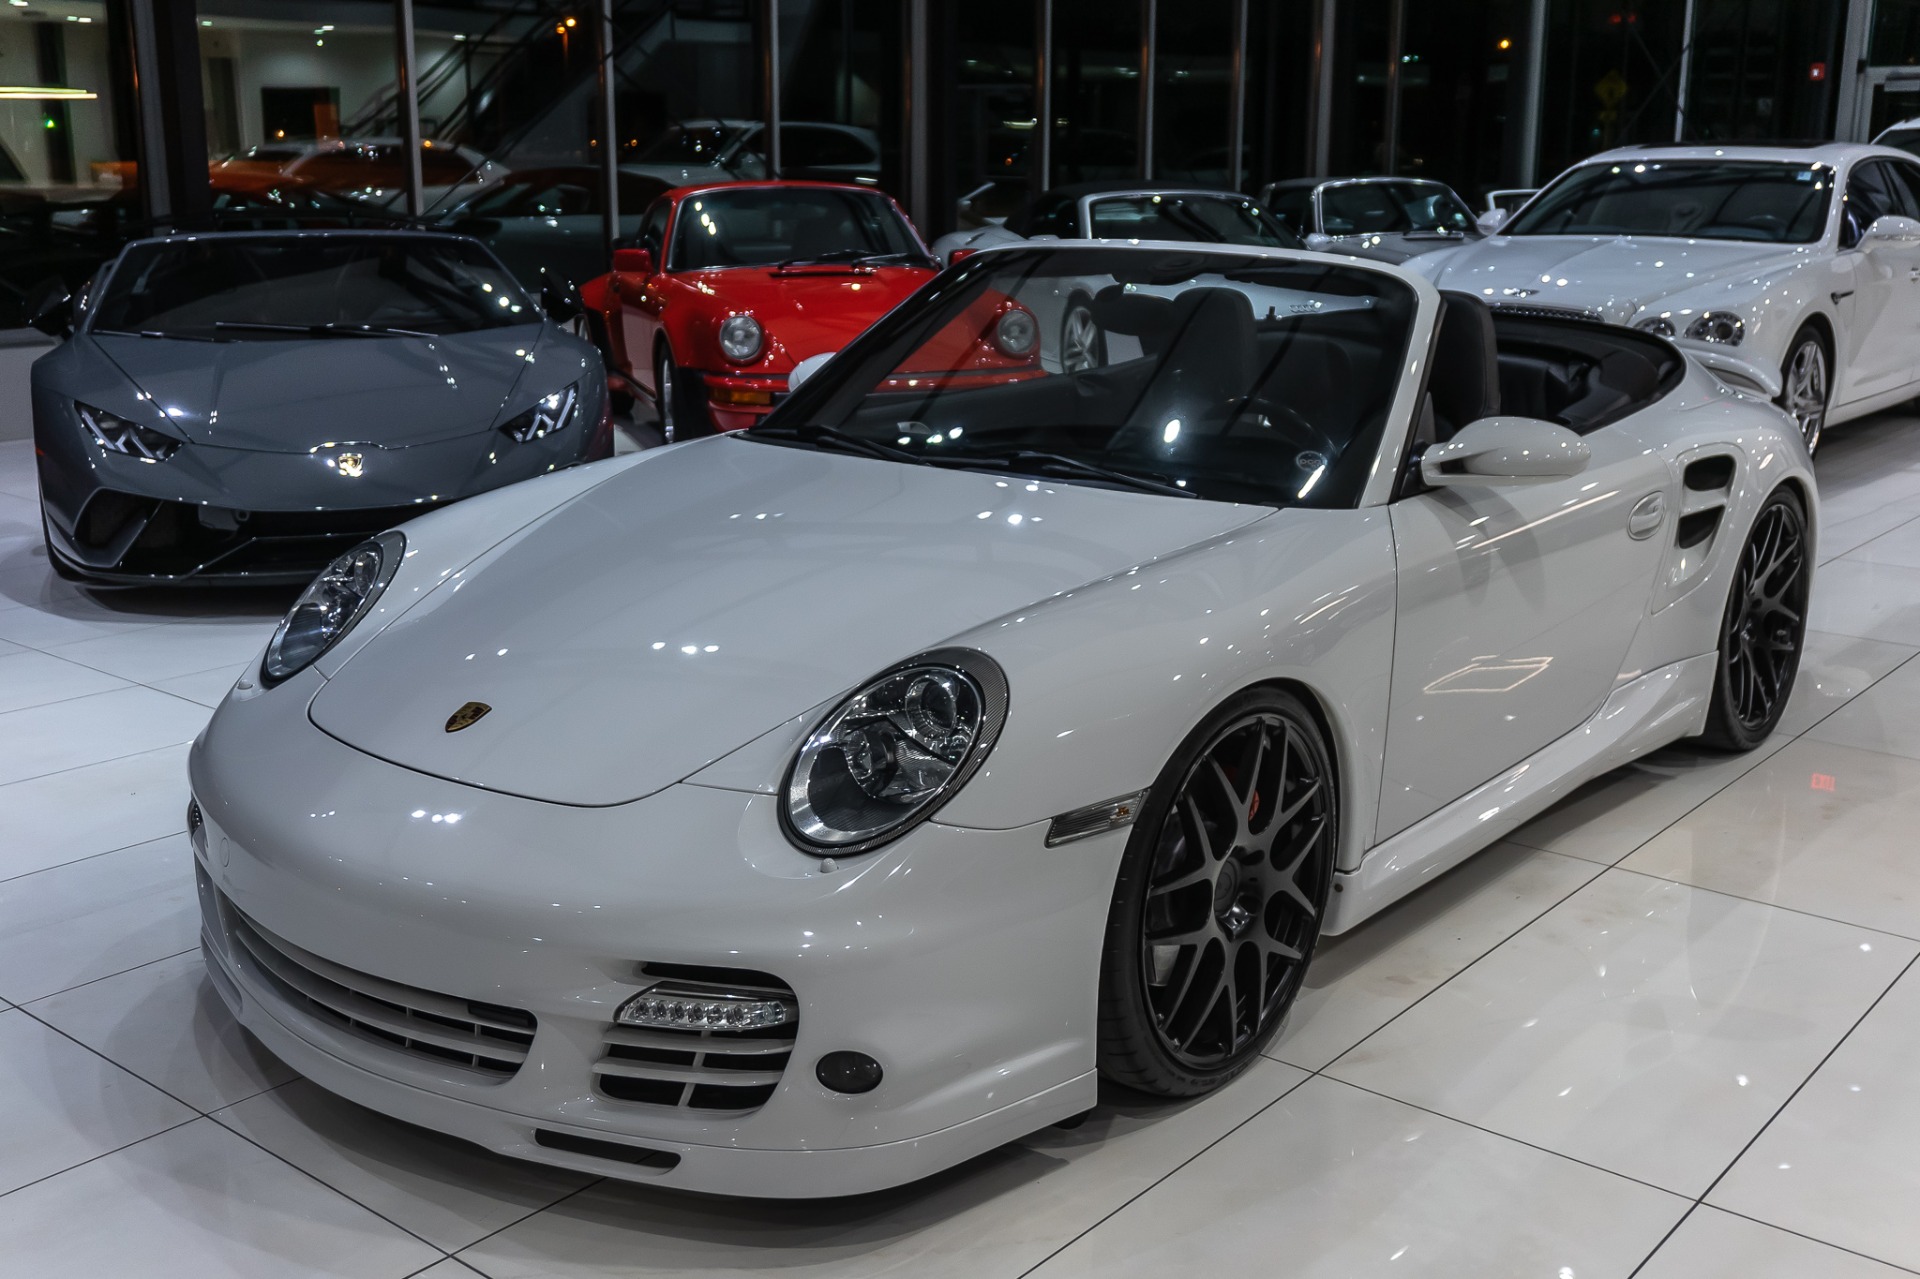 Used-2008-Porsche-911-Turbo-Convertible-6-Speed-MSRP-155K